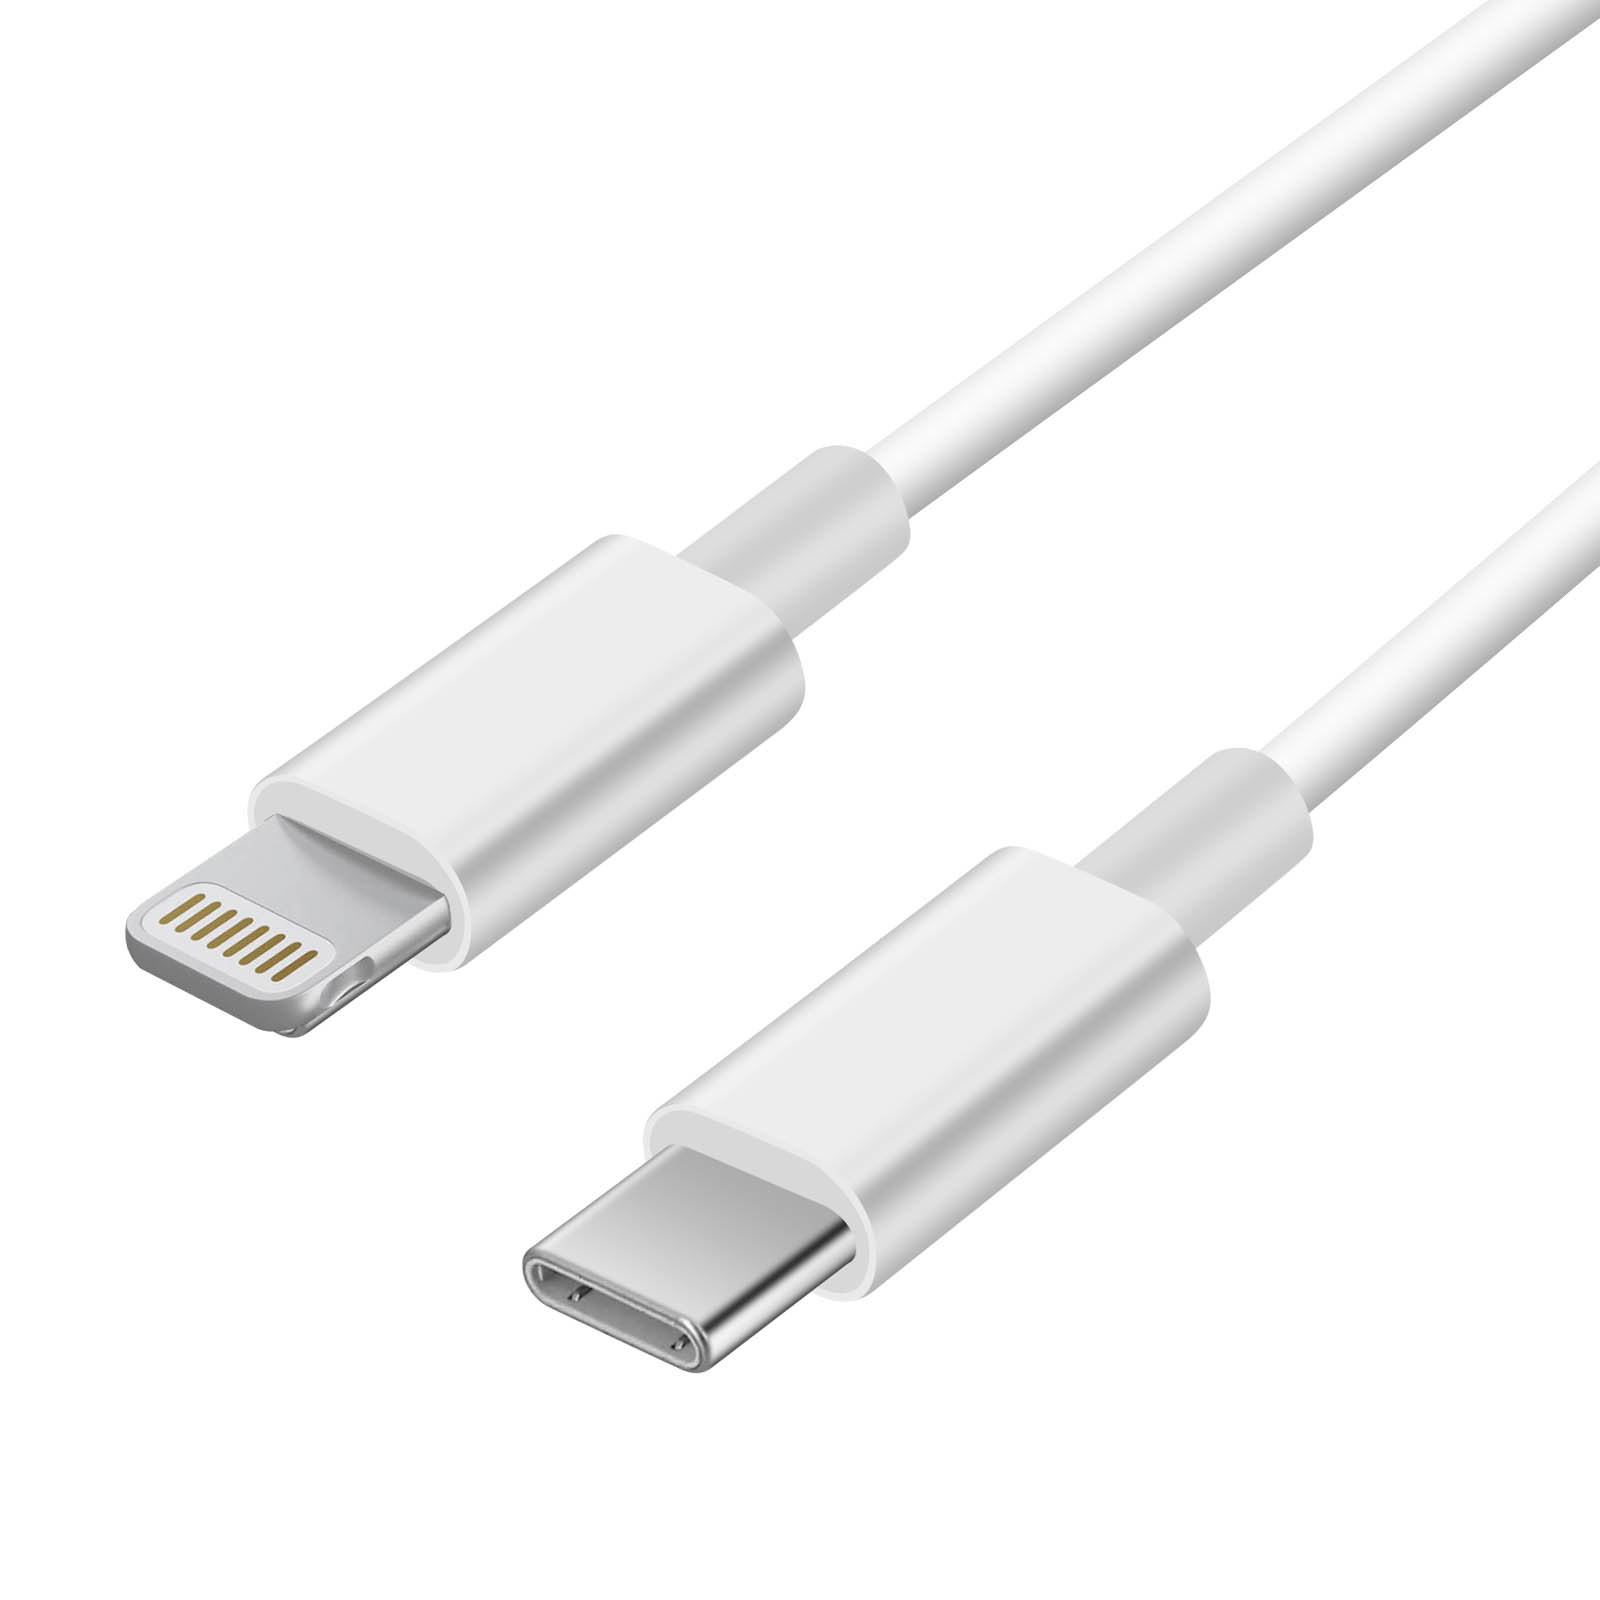 Câble USB-C vers Lightning Original Apple (2m) Charge Rapide iPhone - Blanc  - Français